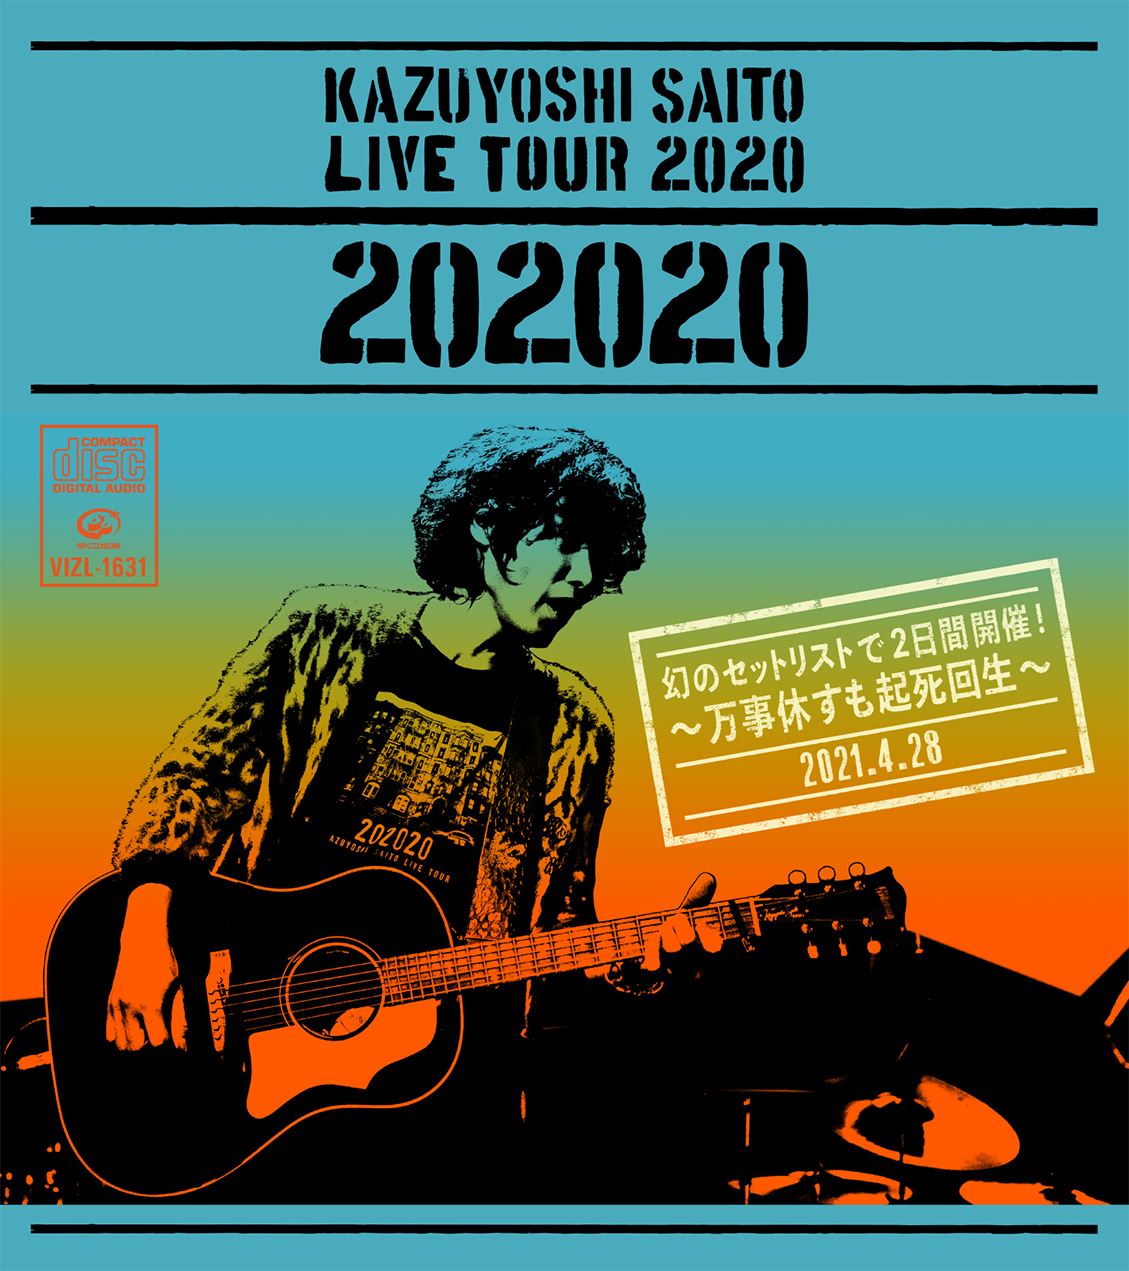 『KAZUYOSHI SAITO LIVE TOUR 2020 “202020” 幻のセットリストで2日間開催！〜万事休すも起死回生〜 Live at 中野サンプラザホール 2021.4.28』CDジャケット